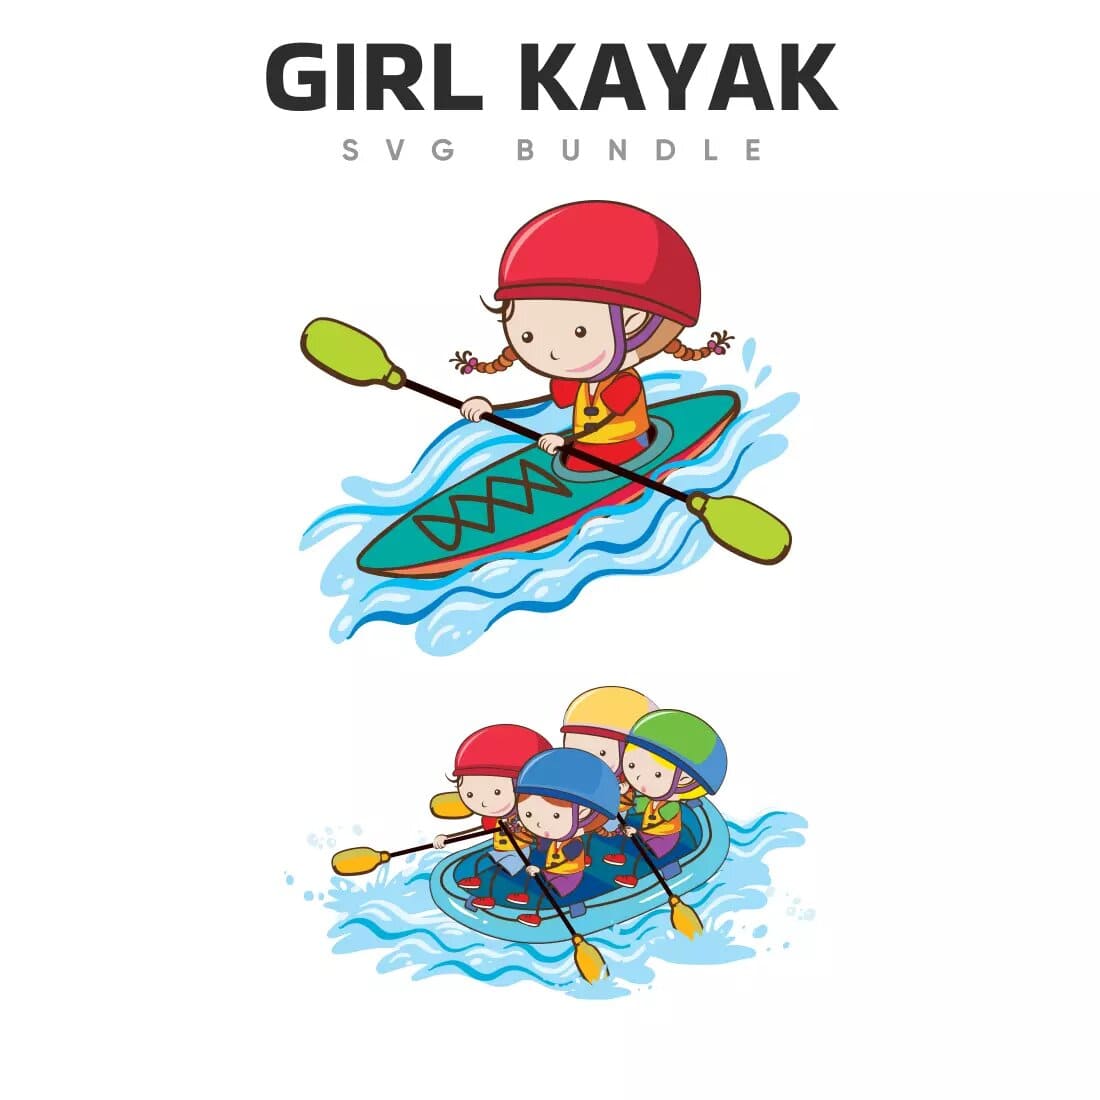 Girl Kayak SVG Bundle Preview 2.